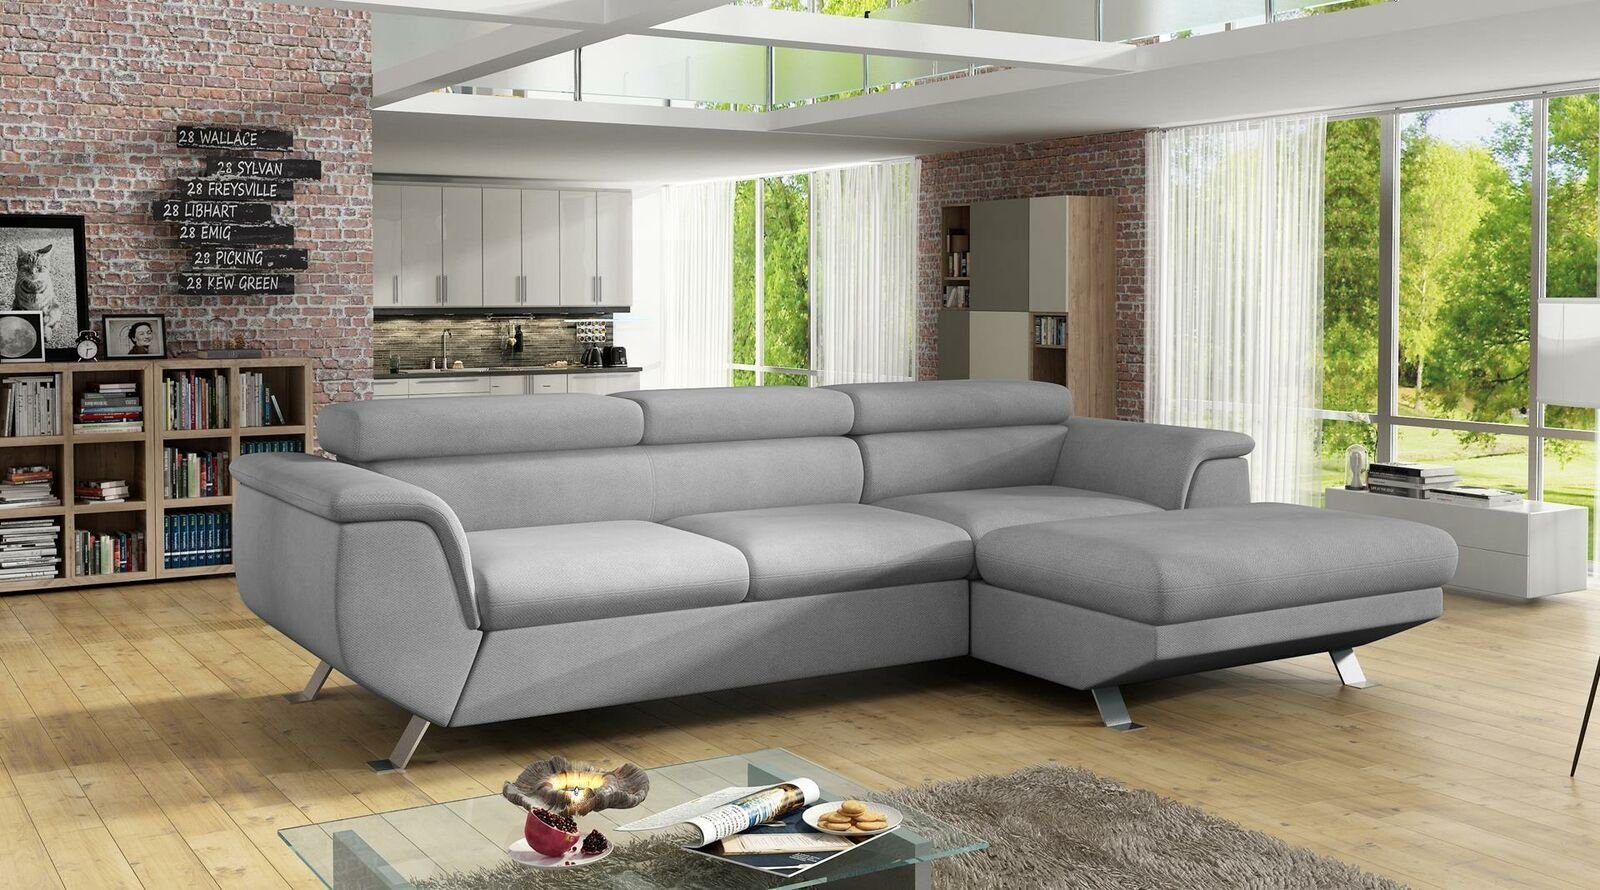 JVmoebel Ecksofa, Eck L Form Textil Sofa Design Ledersofa Ecksofa Polster Eck Couch Grau